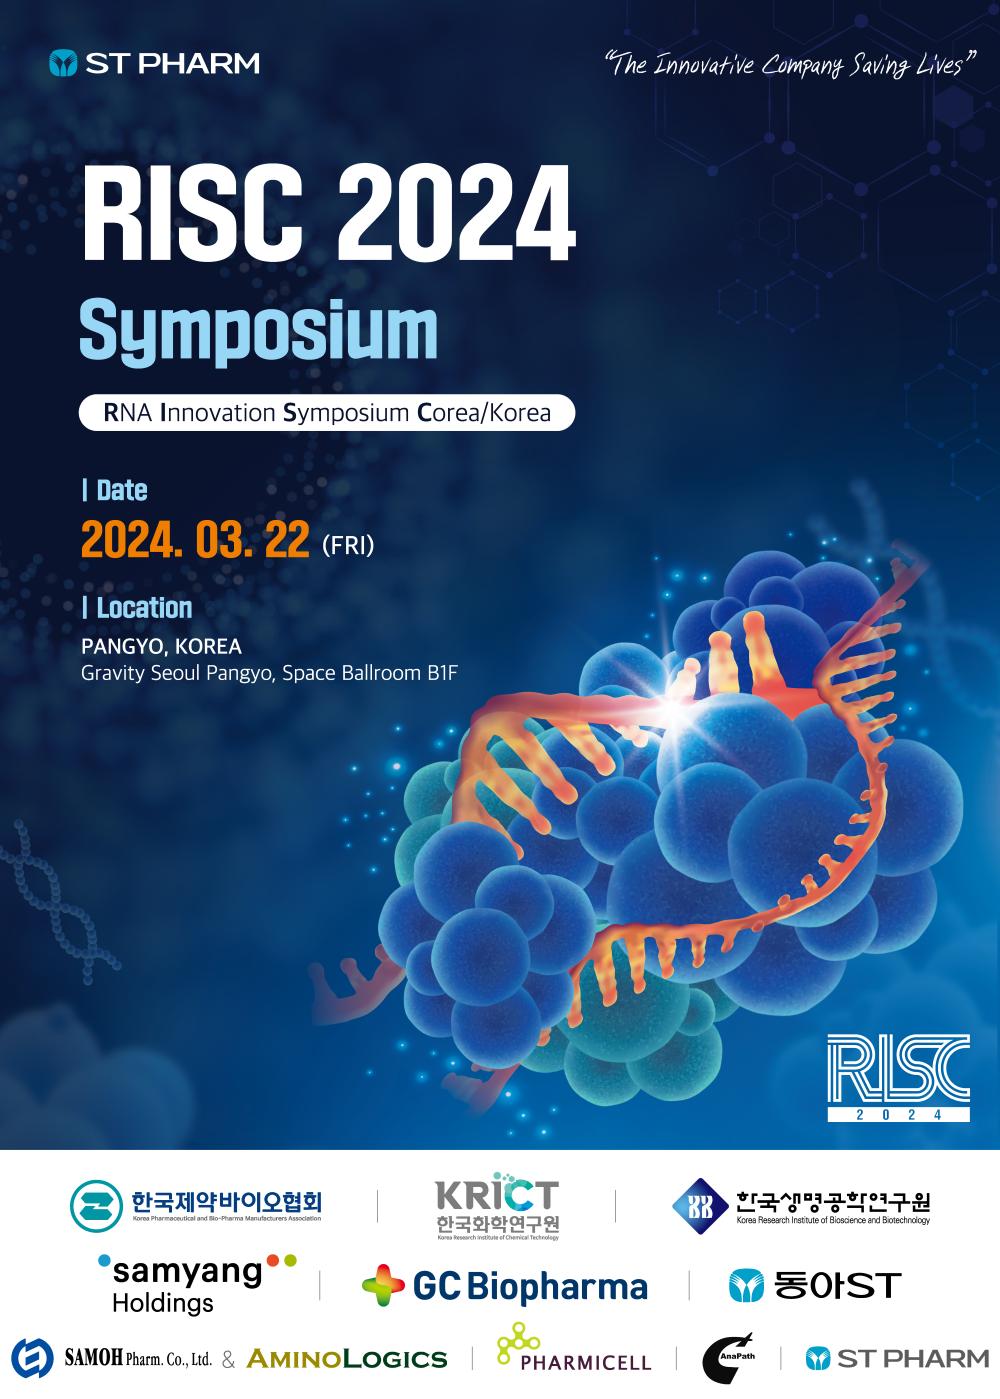 [Notice] RNA Innovation Symposium Corea/Korea 2024 (RISC 2024) — ST PHARM